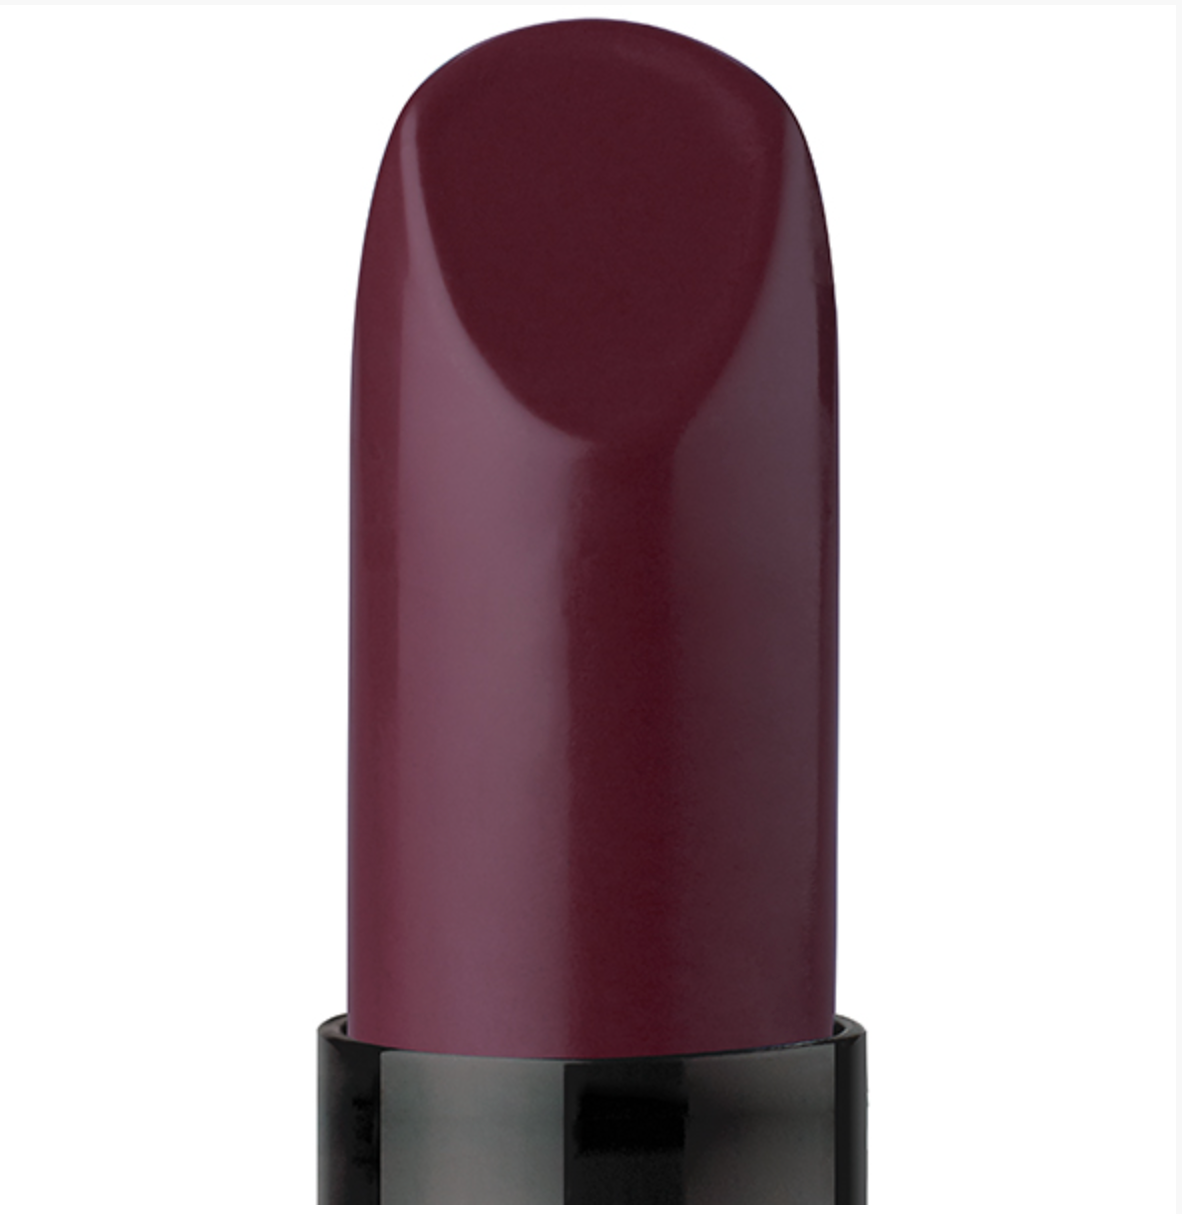 LTW Deco deep burgundy lipstick color swatch